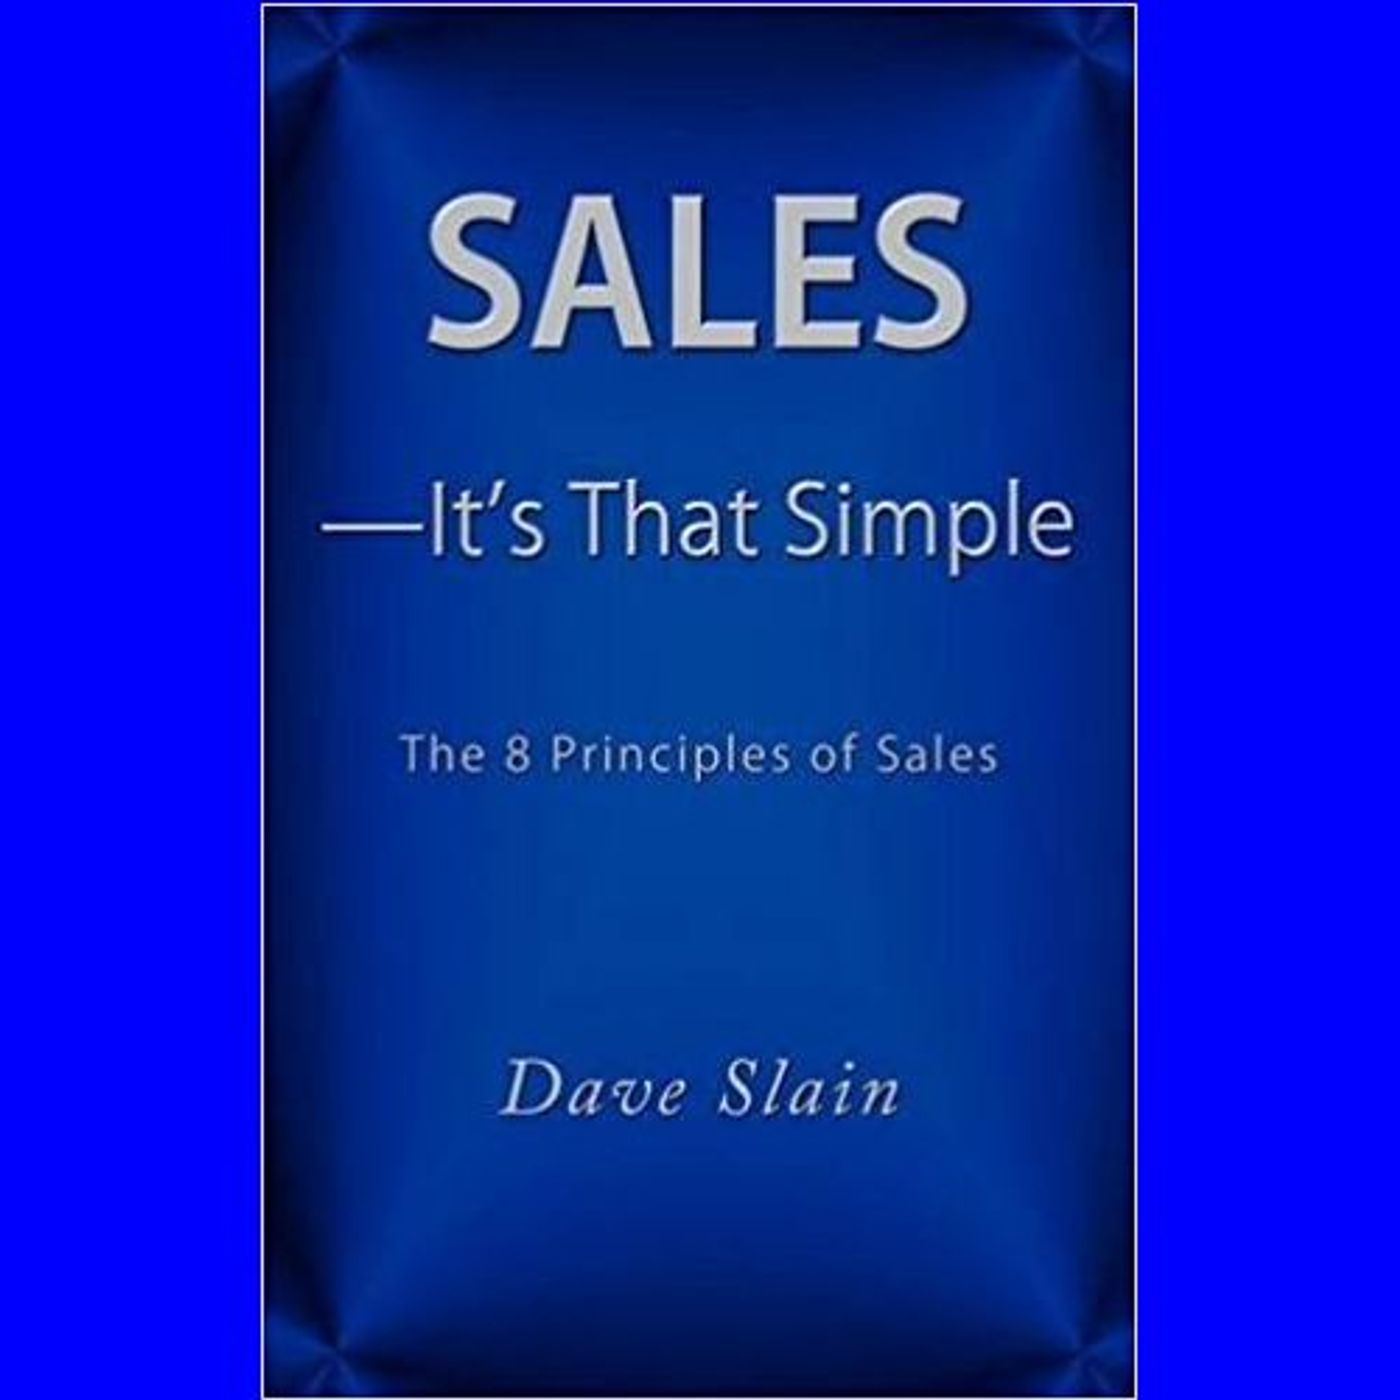 E1 David Slain - Sales its that Simple